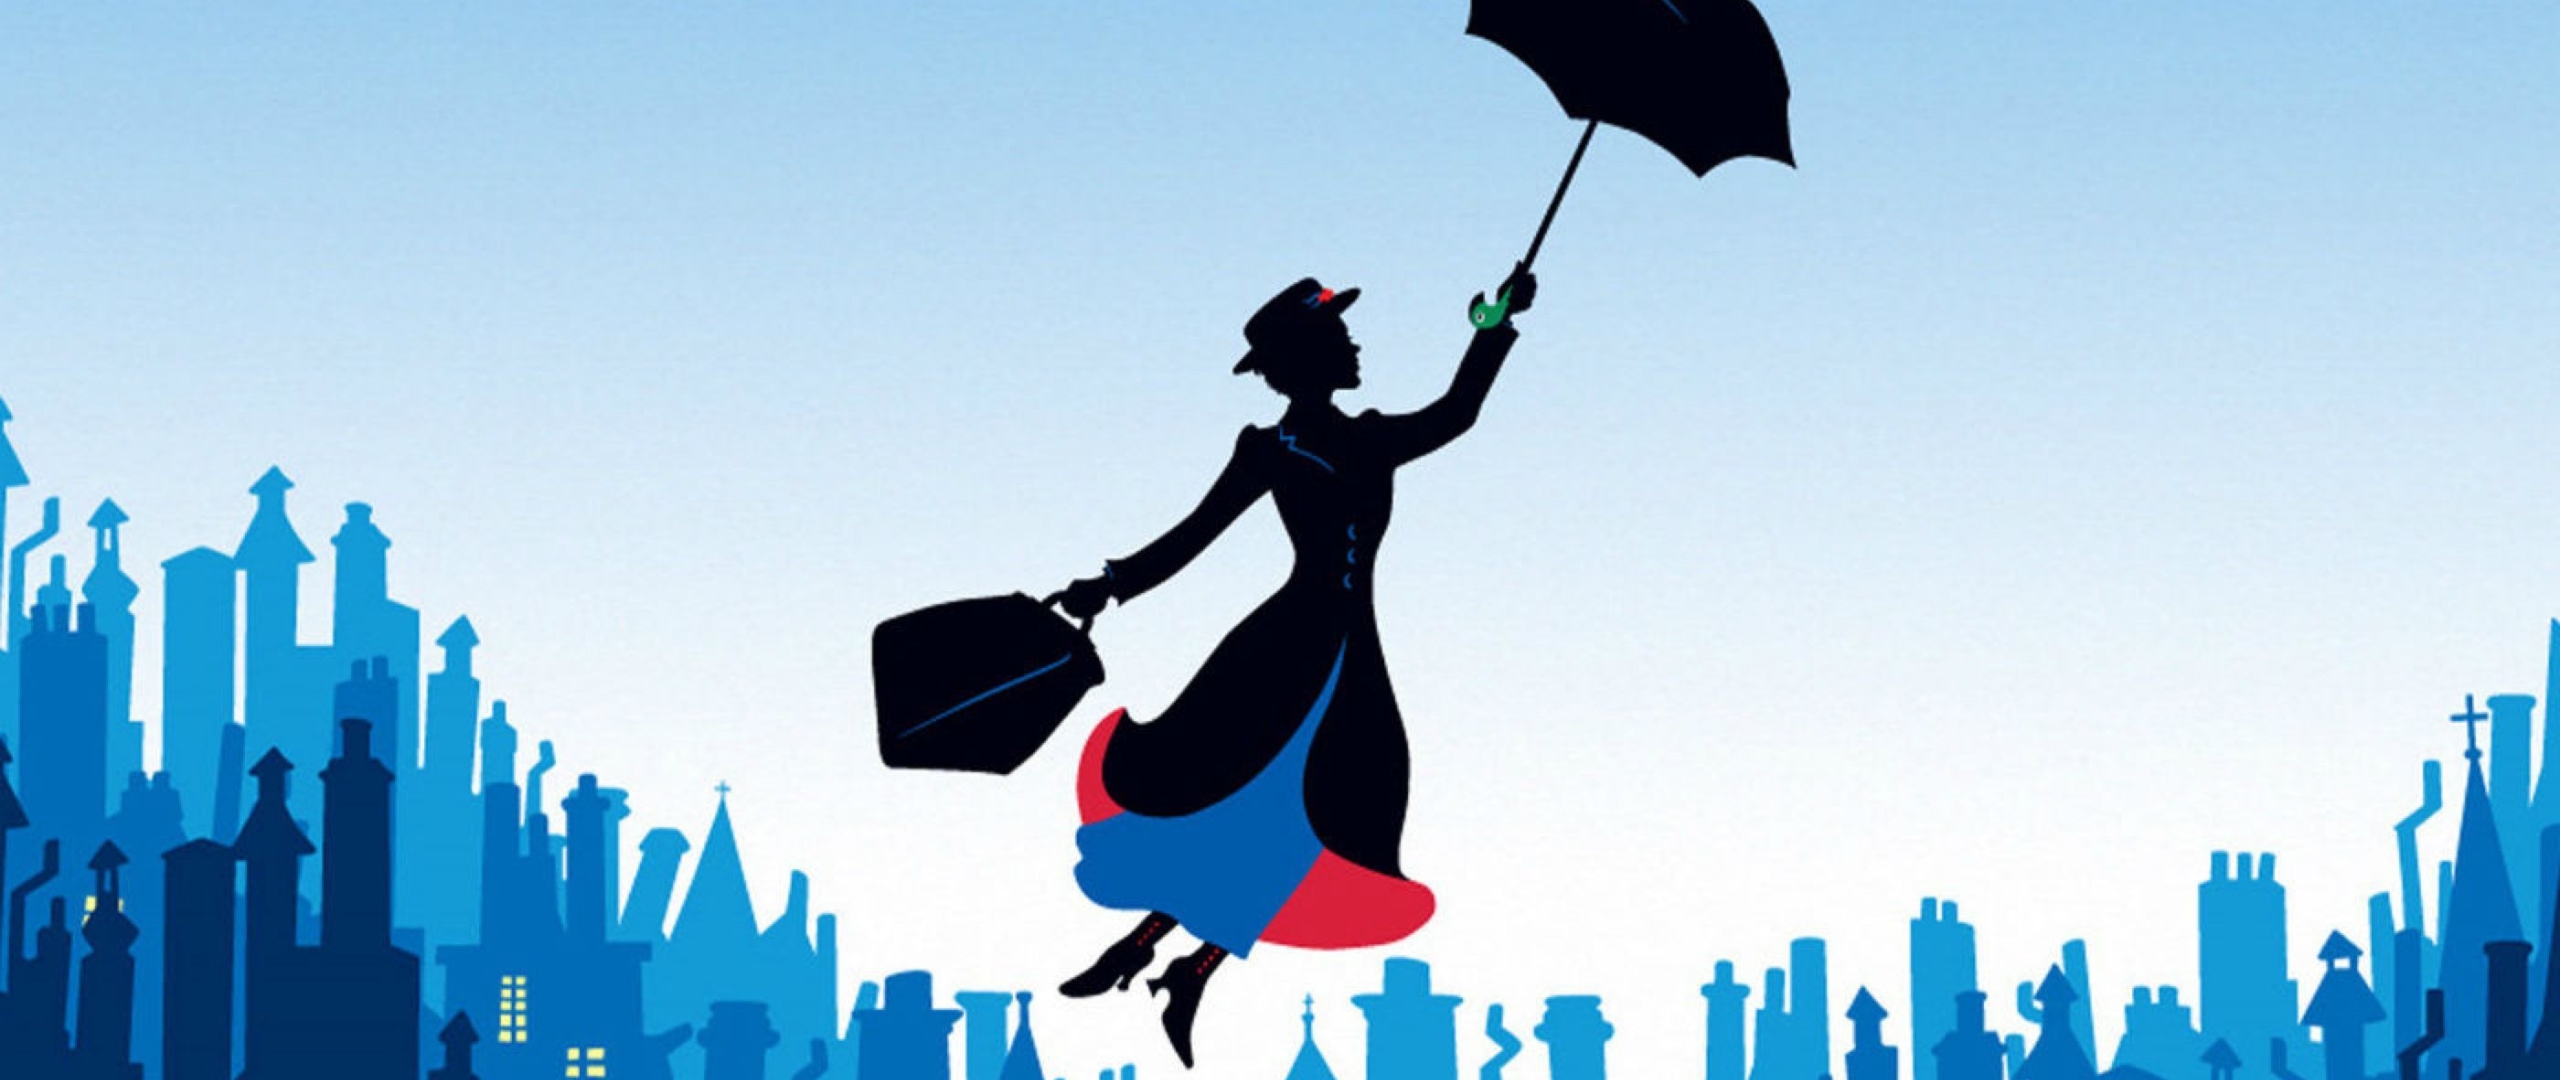 Mary Poppins Broadway Poster A2ZtbWaUmZqaraWkpJRnamtlrWZlbWU 